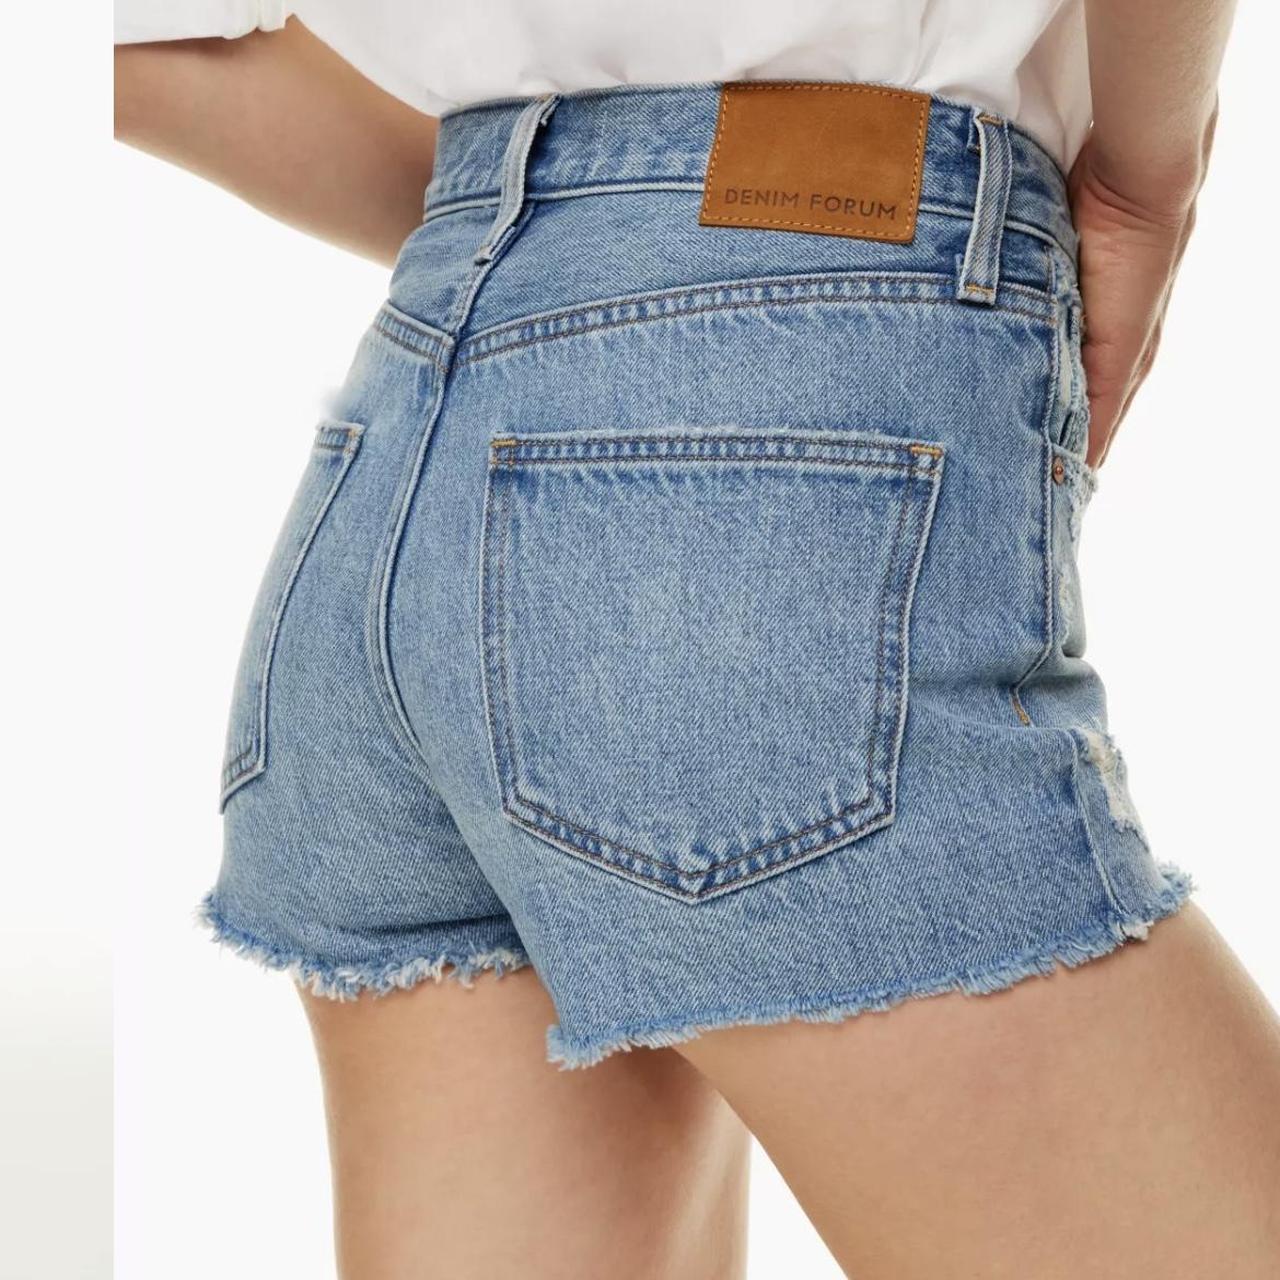 Denim forum yoko shorts. Mid-rise Jean shorts size... - Depop